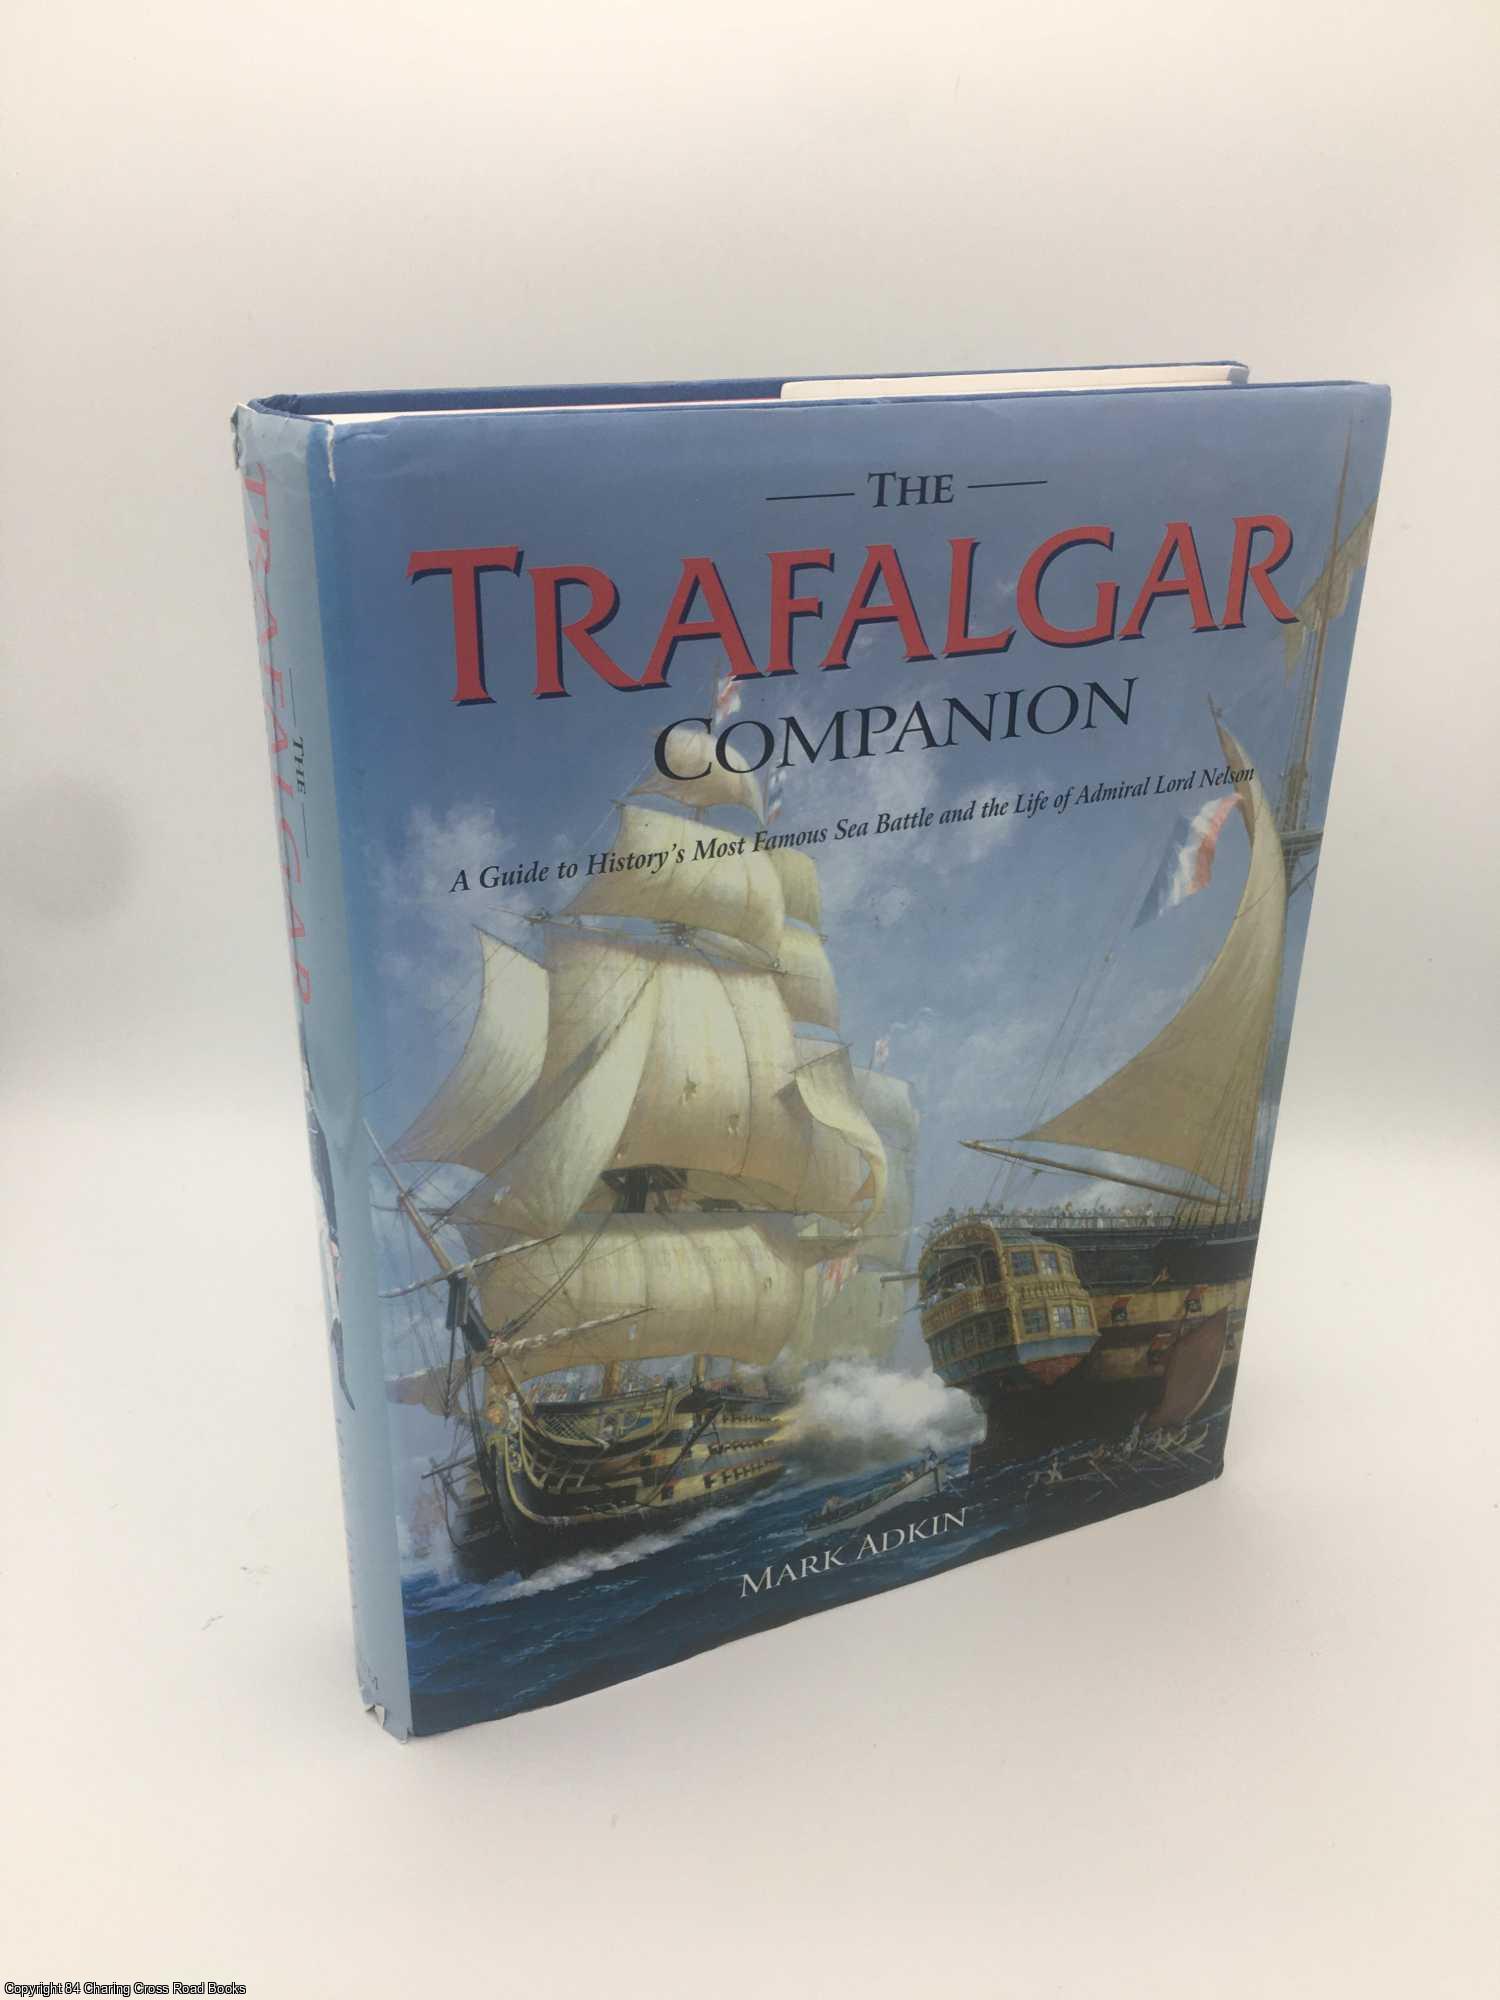 Adkin, Mark - The Trafalgar Companion: The Complete Guide to History's Most Famous Sea Battle